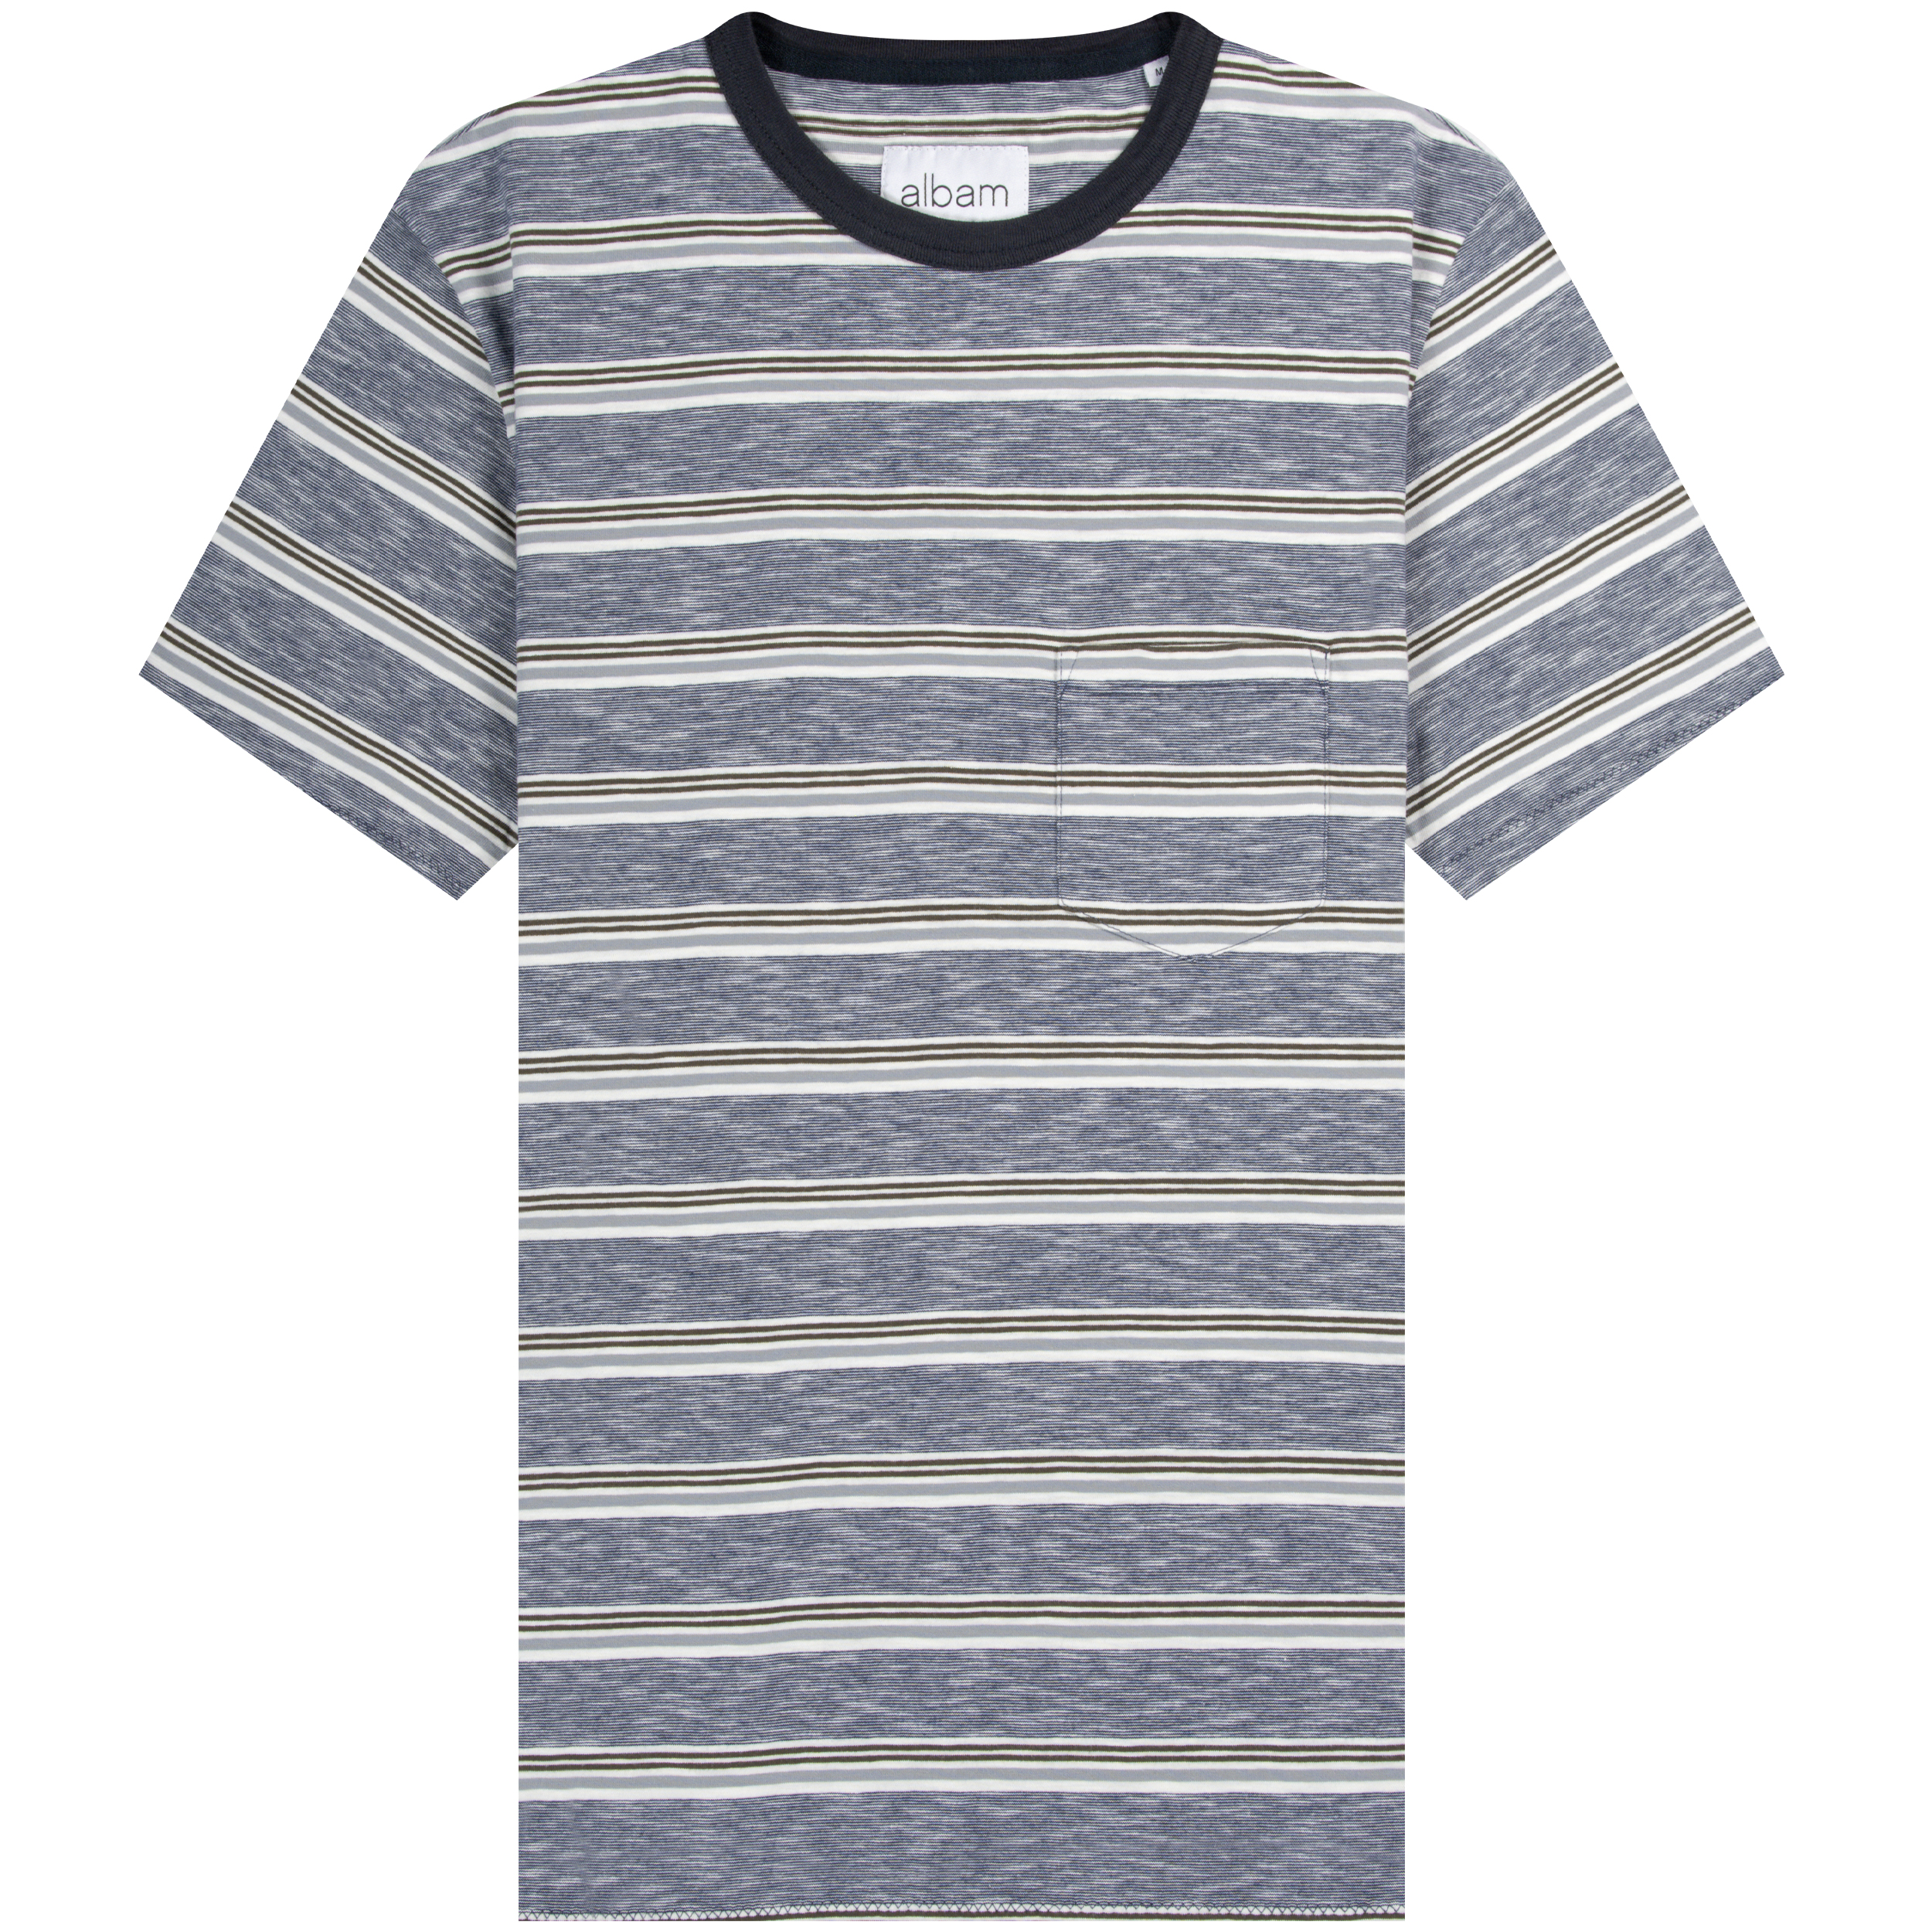 ALBAM ’Heritage Stripe’ T-Shirt Navy